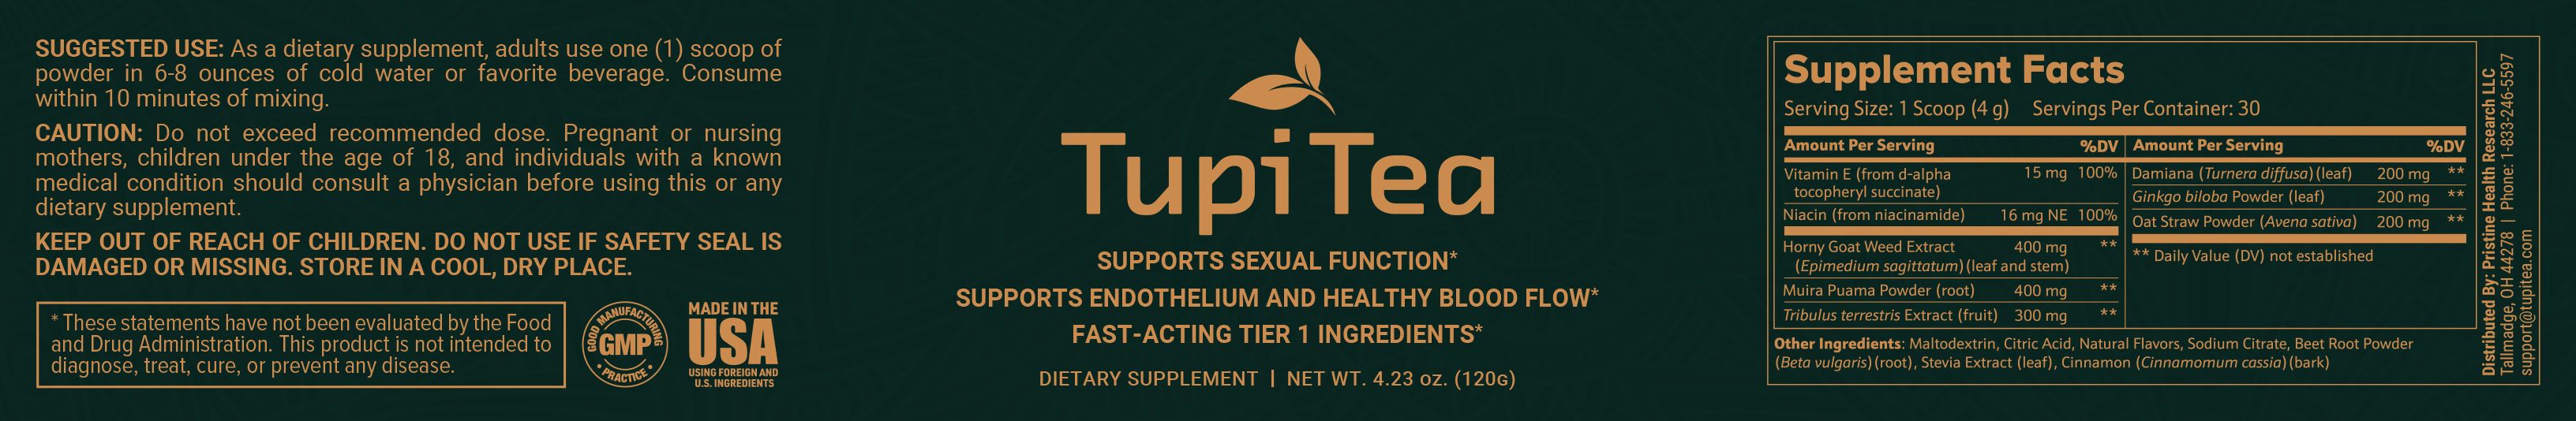 Tupi Tea Maximum Strength Male Enhancement